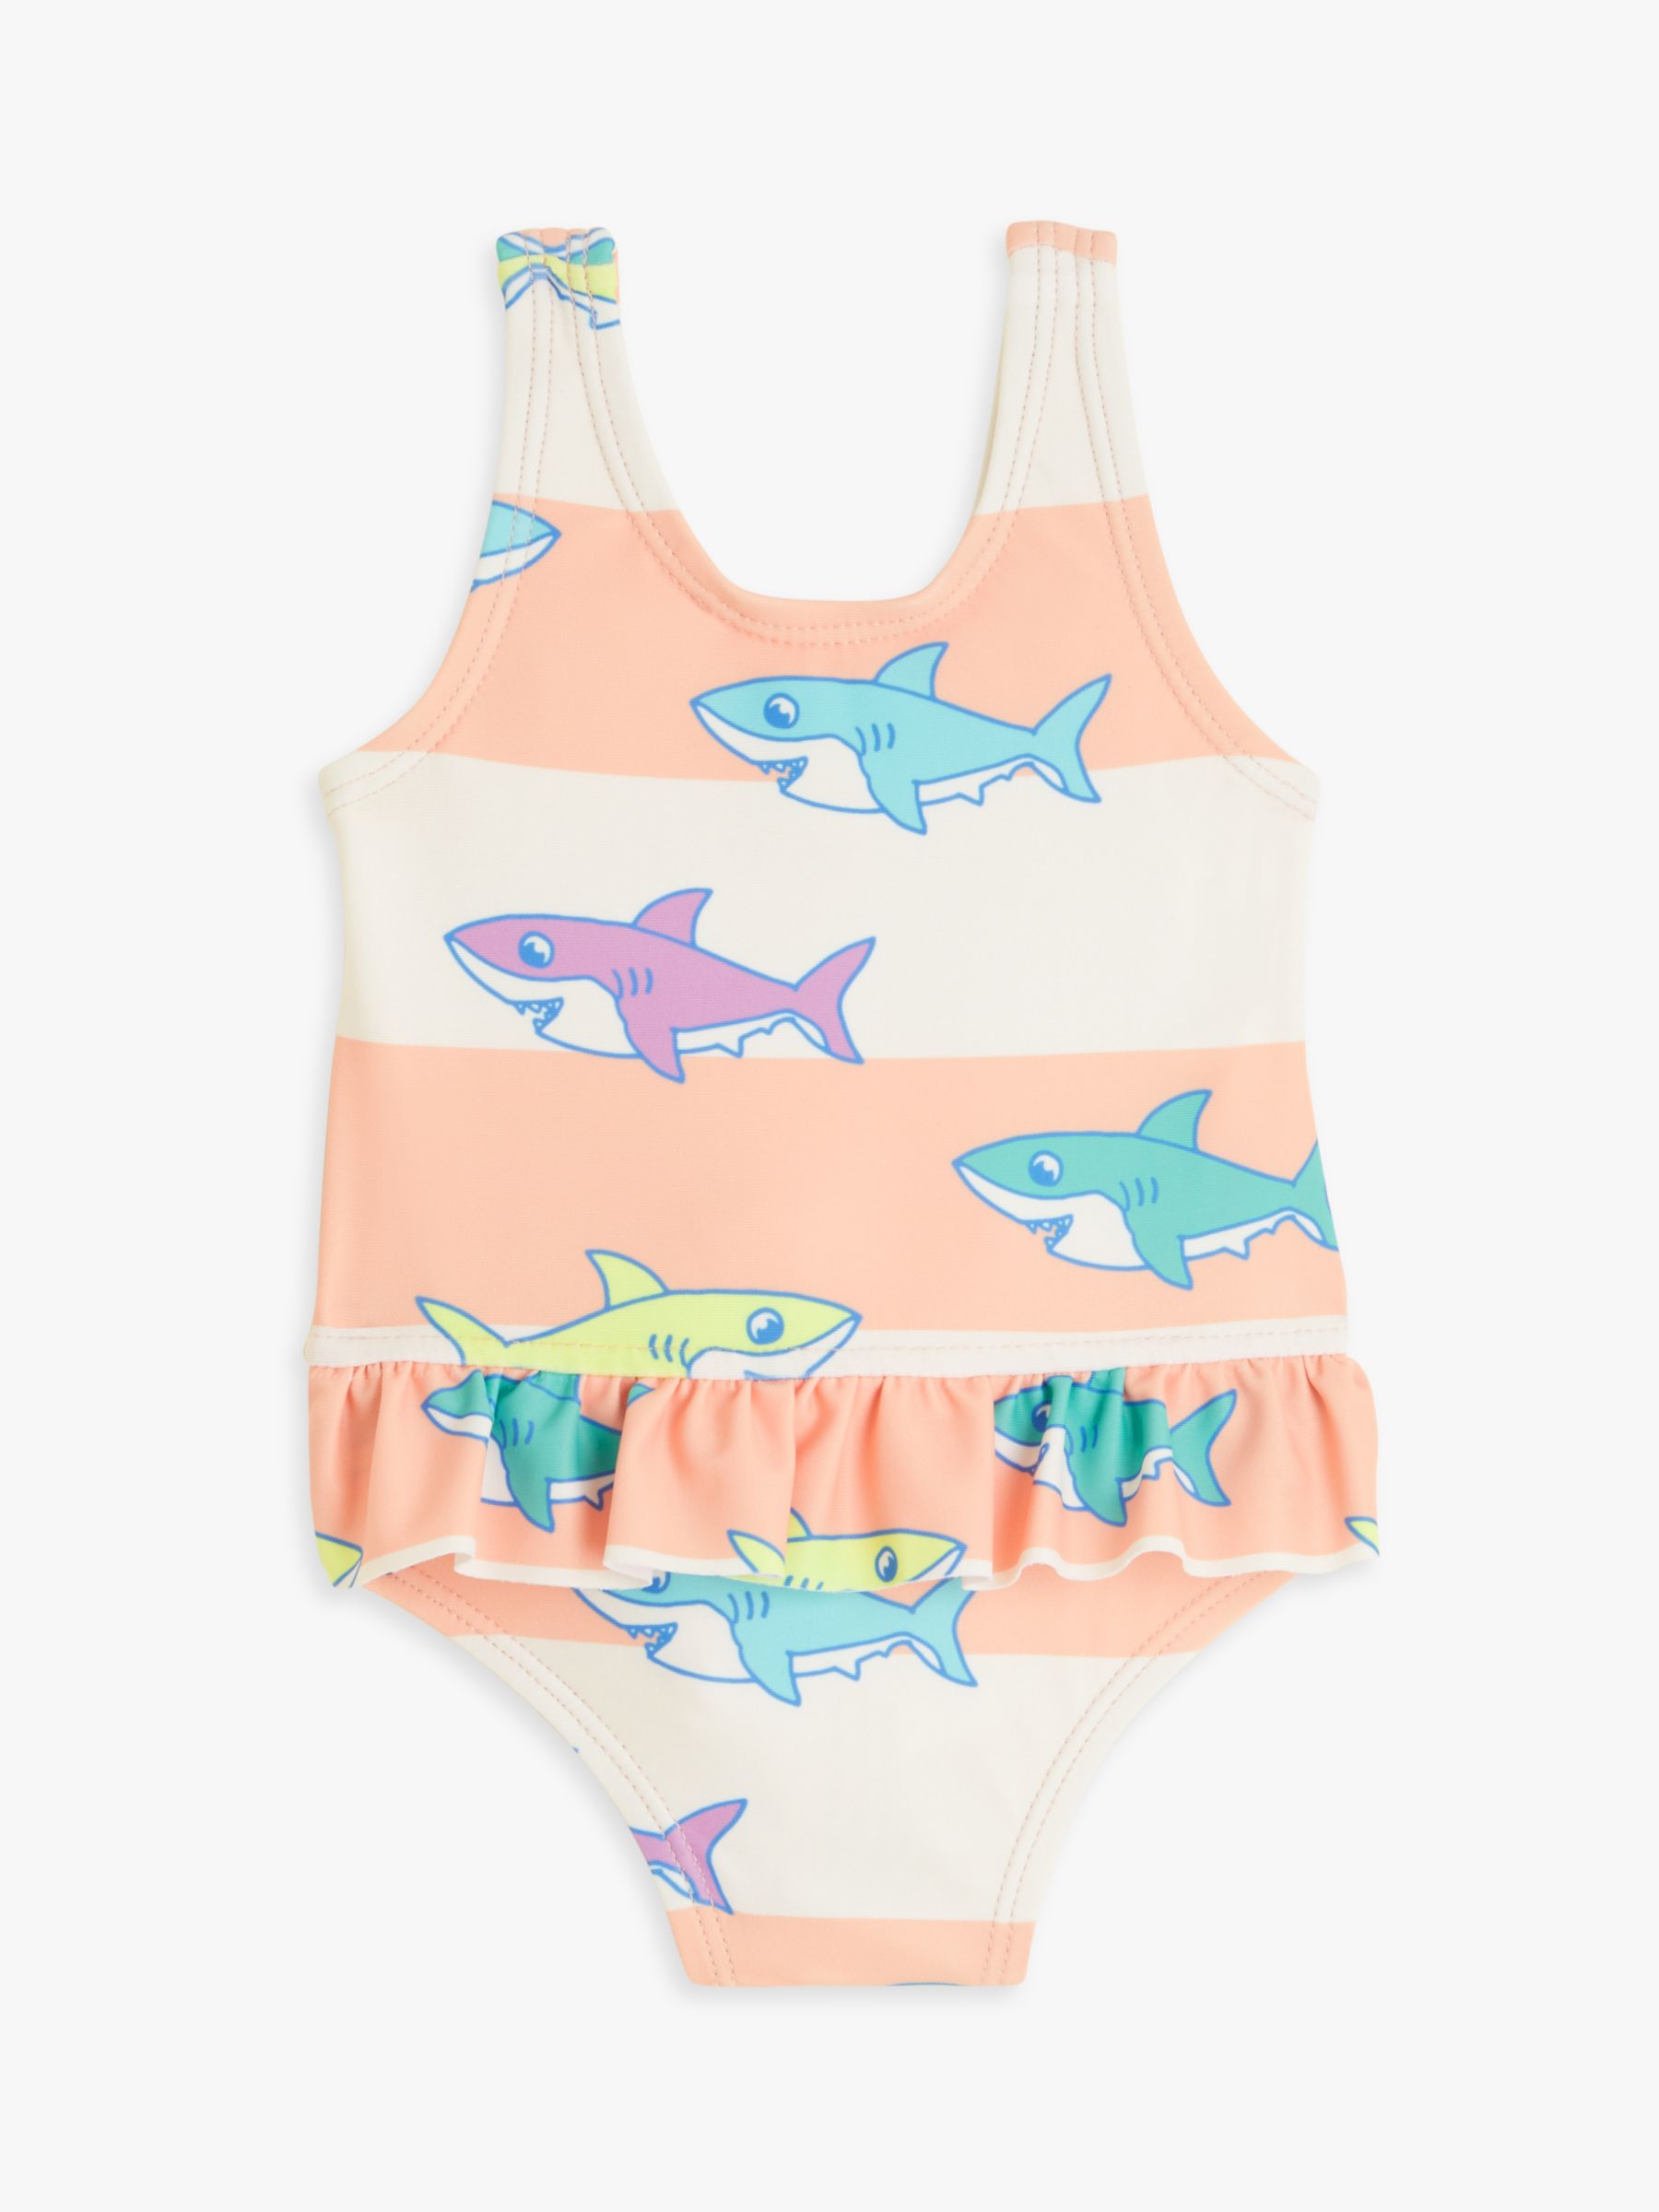  Baby Shark Unisex Training Pant Multipacks with